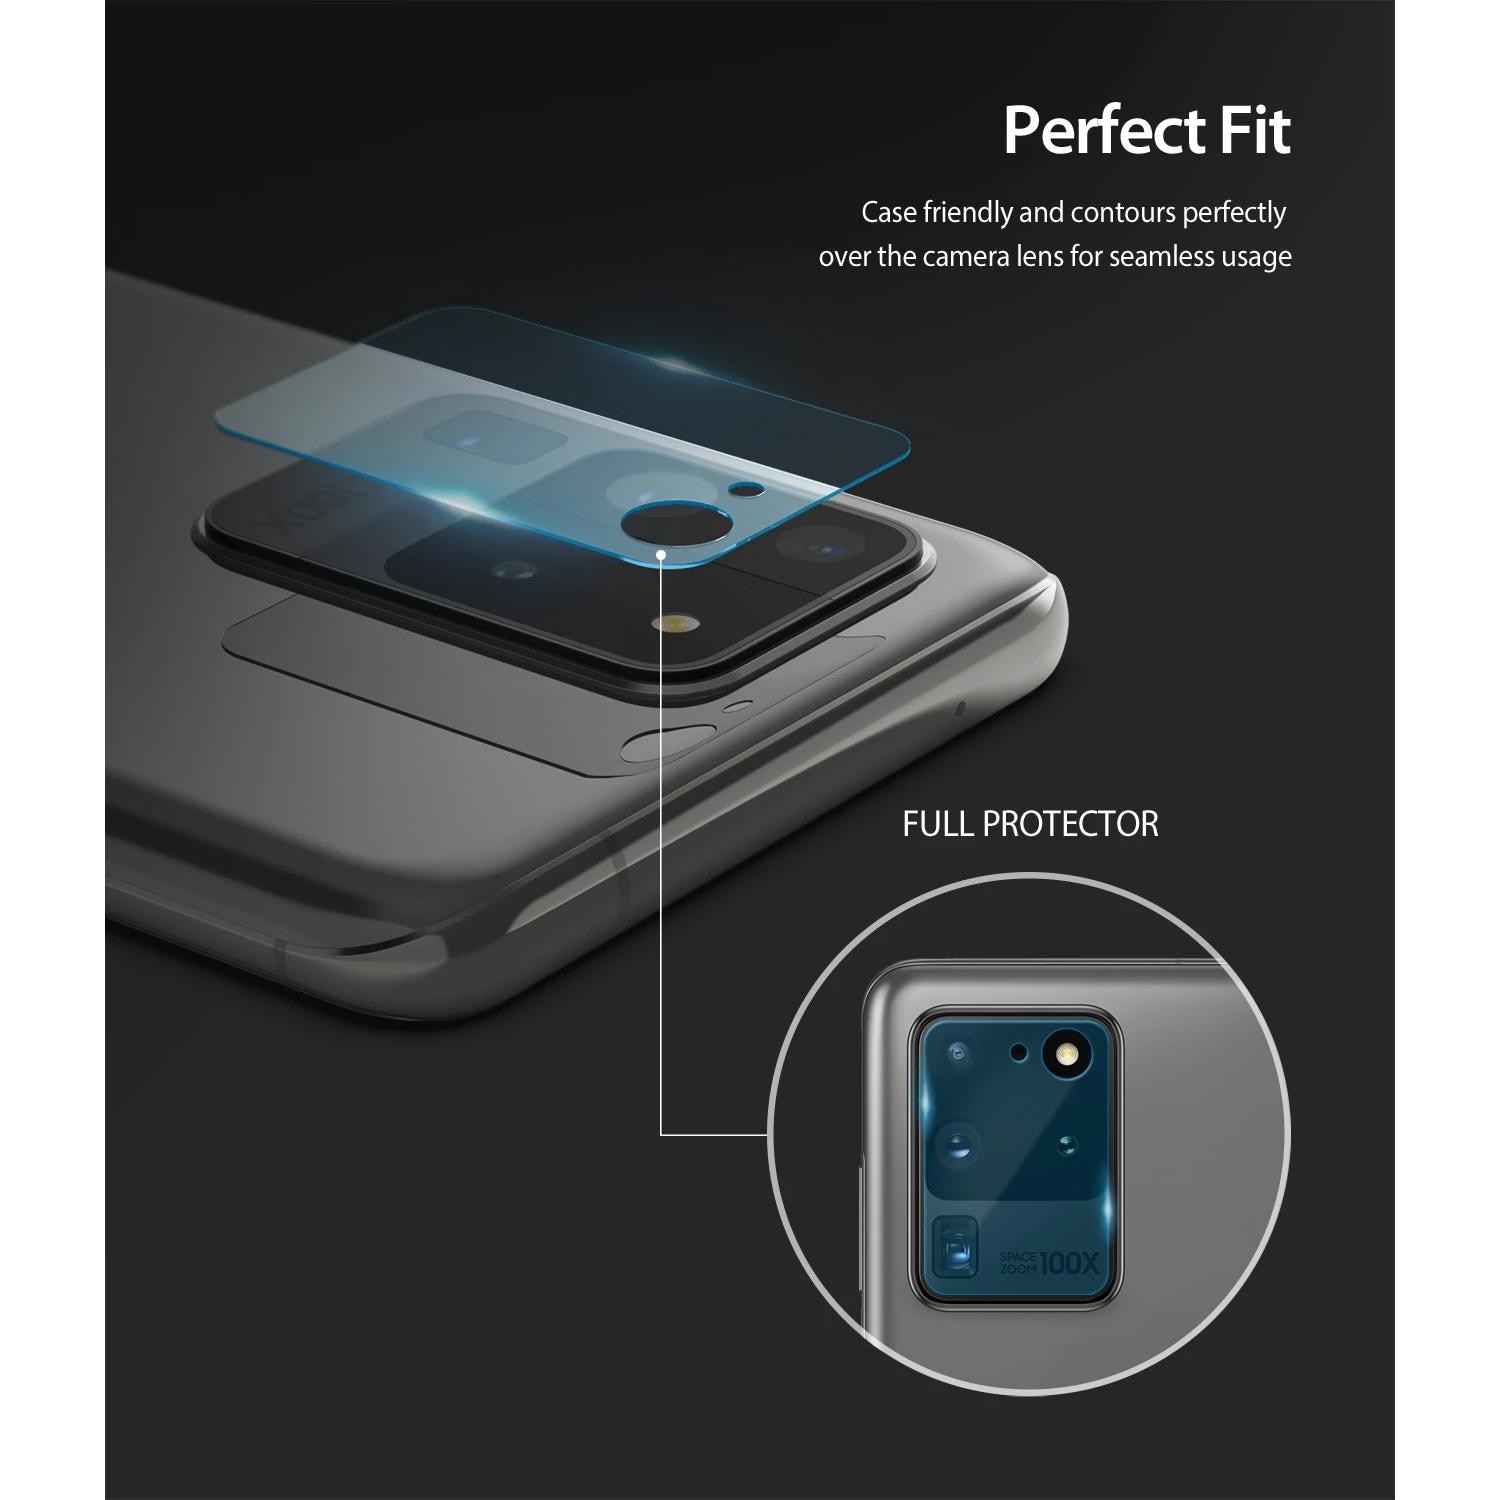 ID Glass Camera Protector Samsung Galaxy S20 Ultra